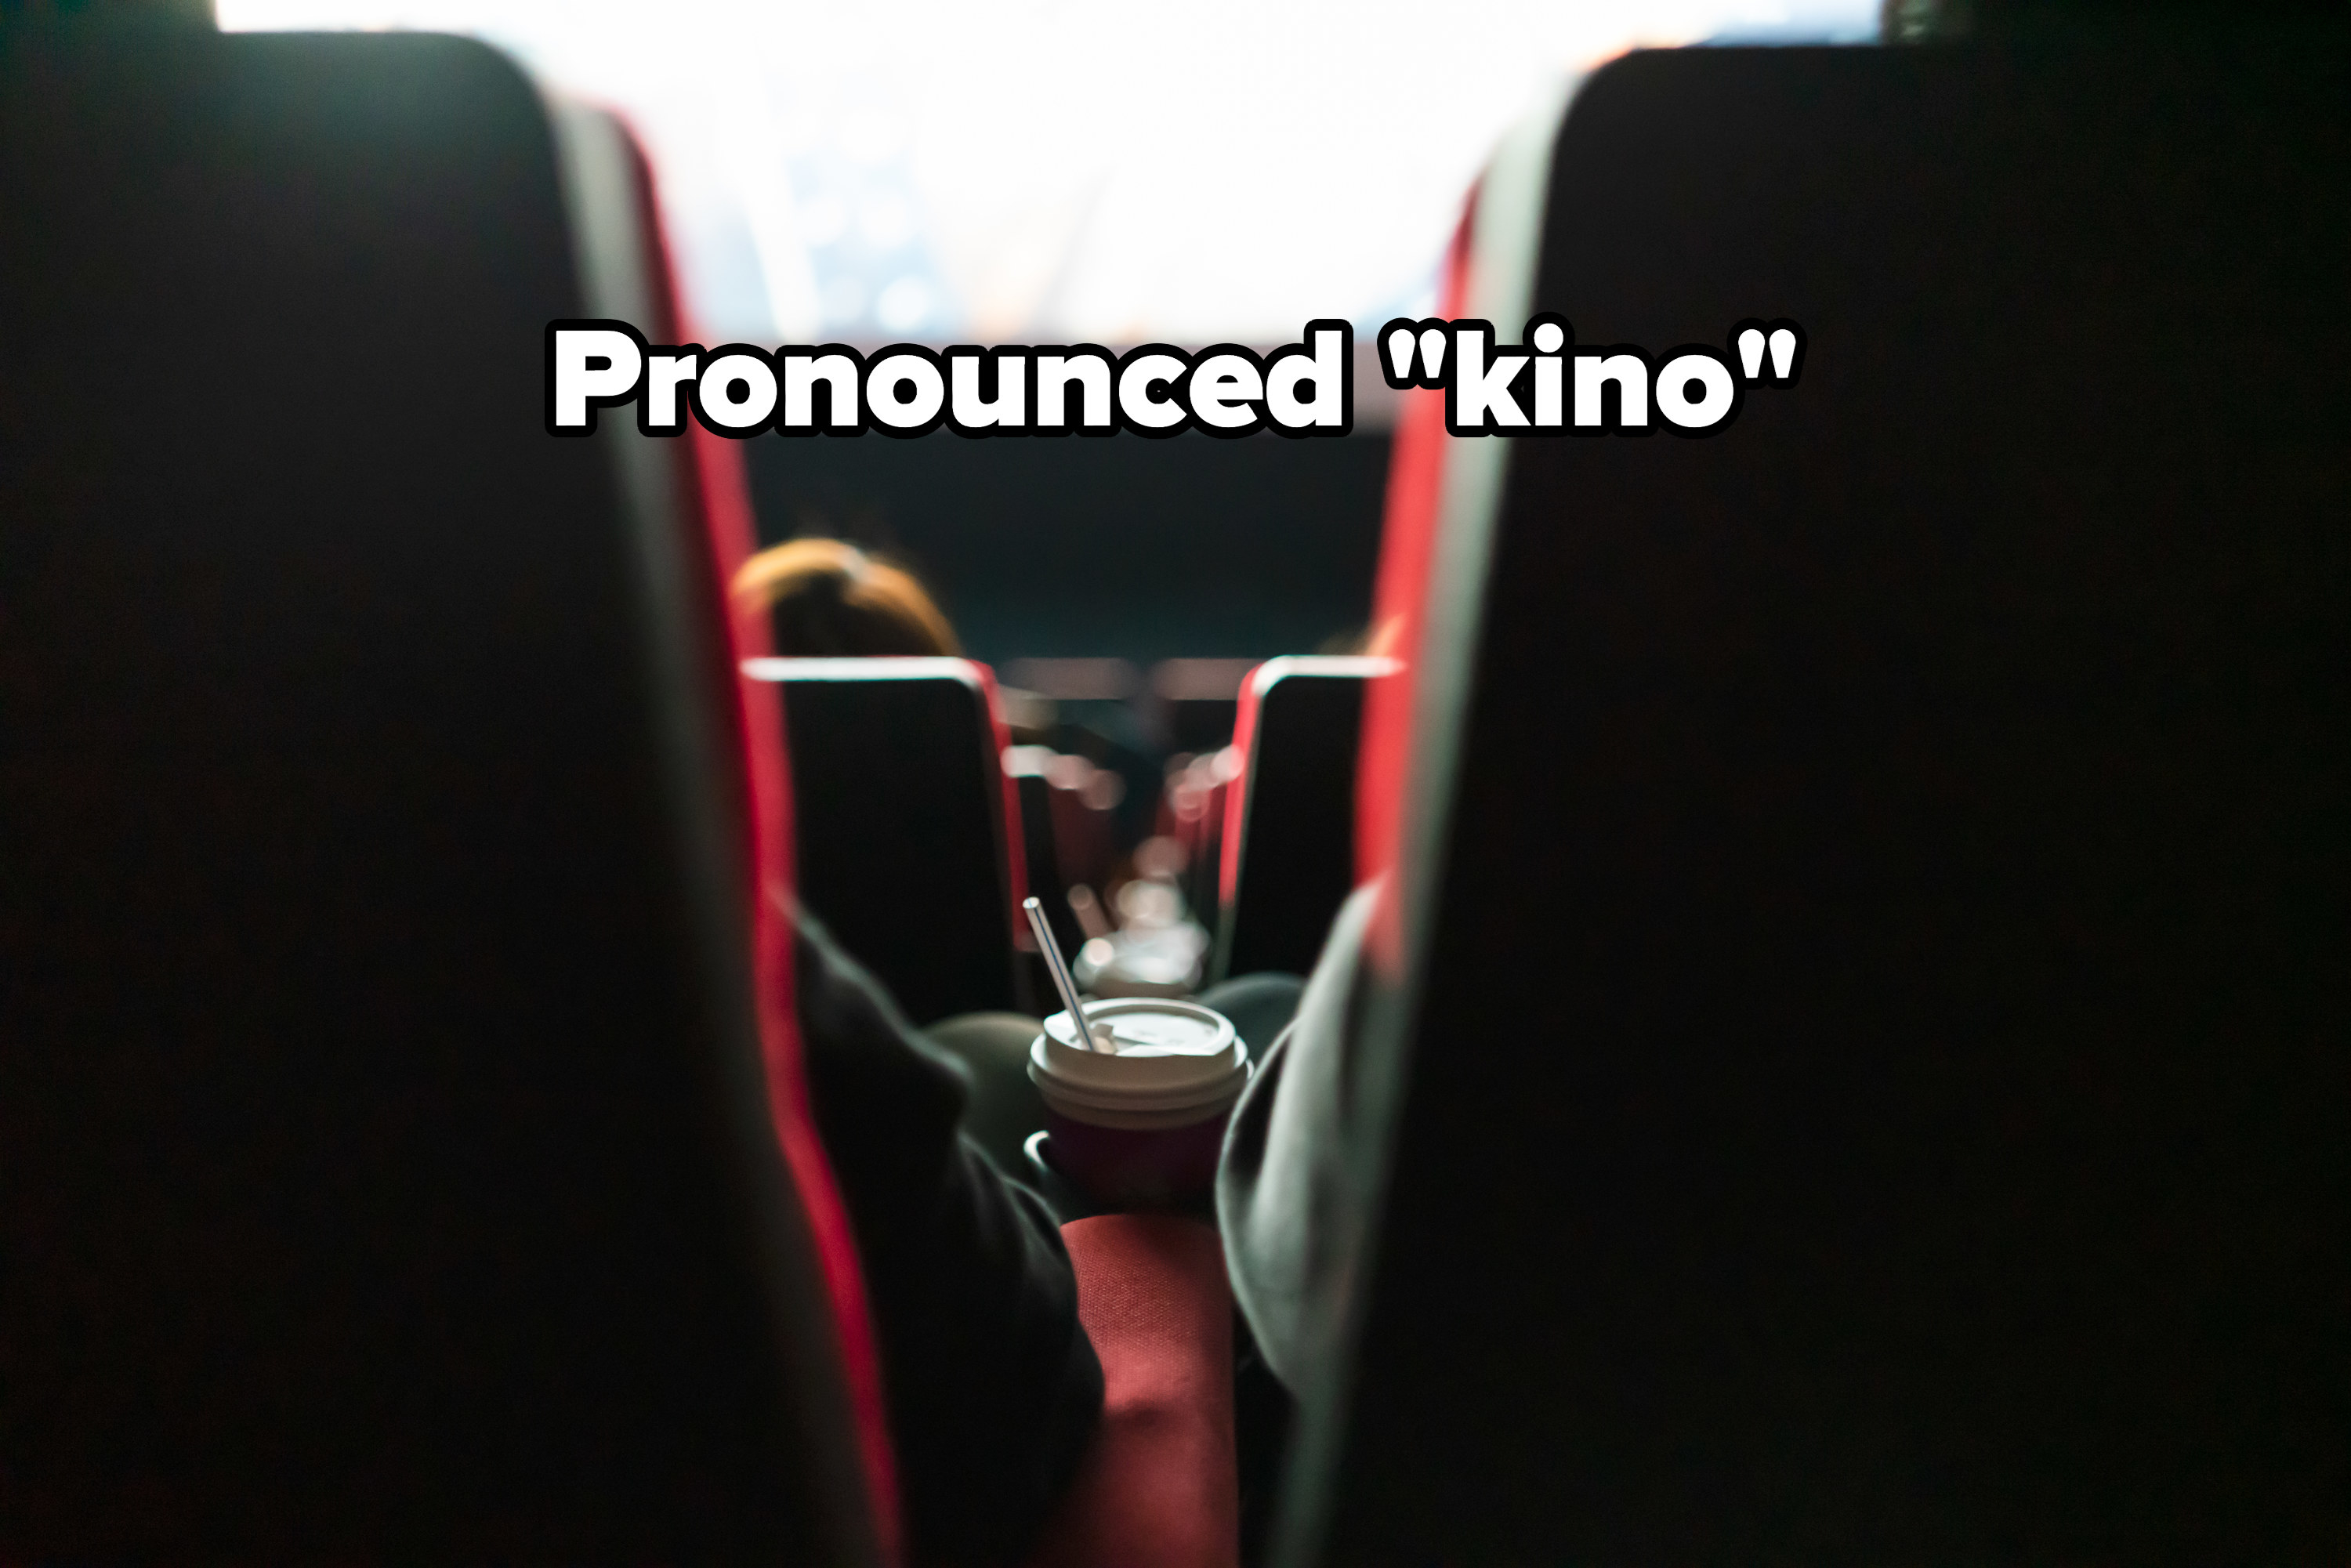 Pronounced kino